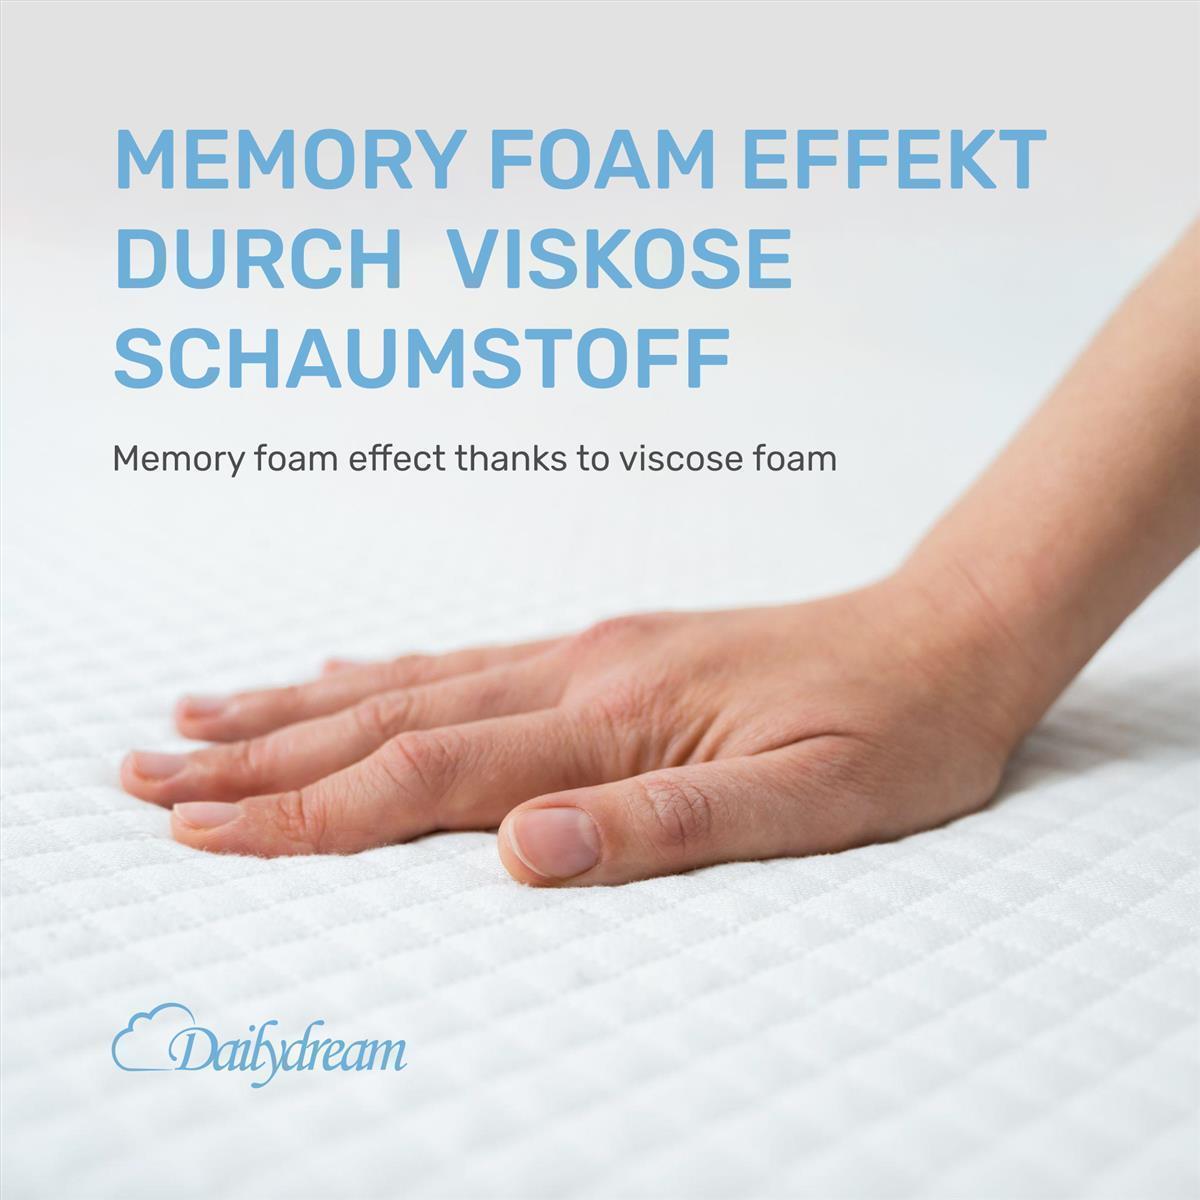 Dailydream viscoelastischer Matratzentopper mit Memory Foam Effekt, Edition "Clean Ocean"